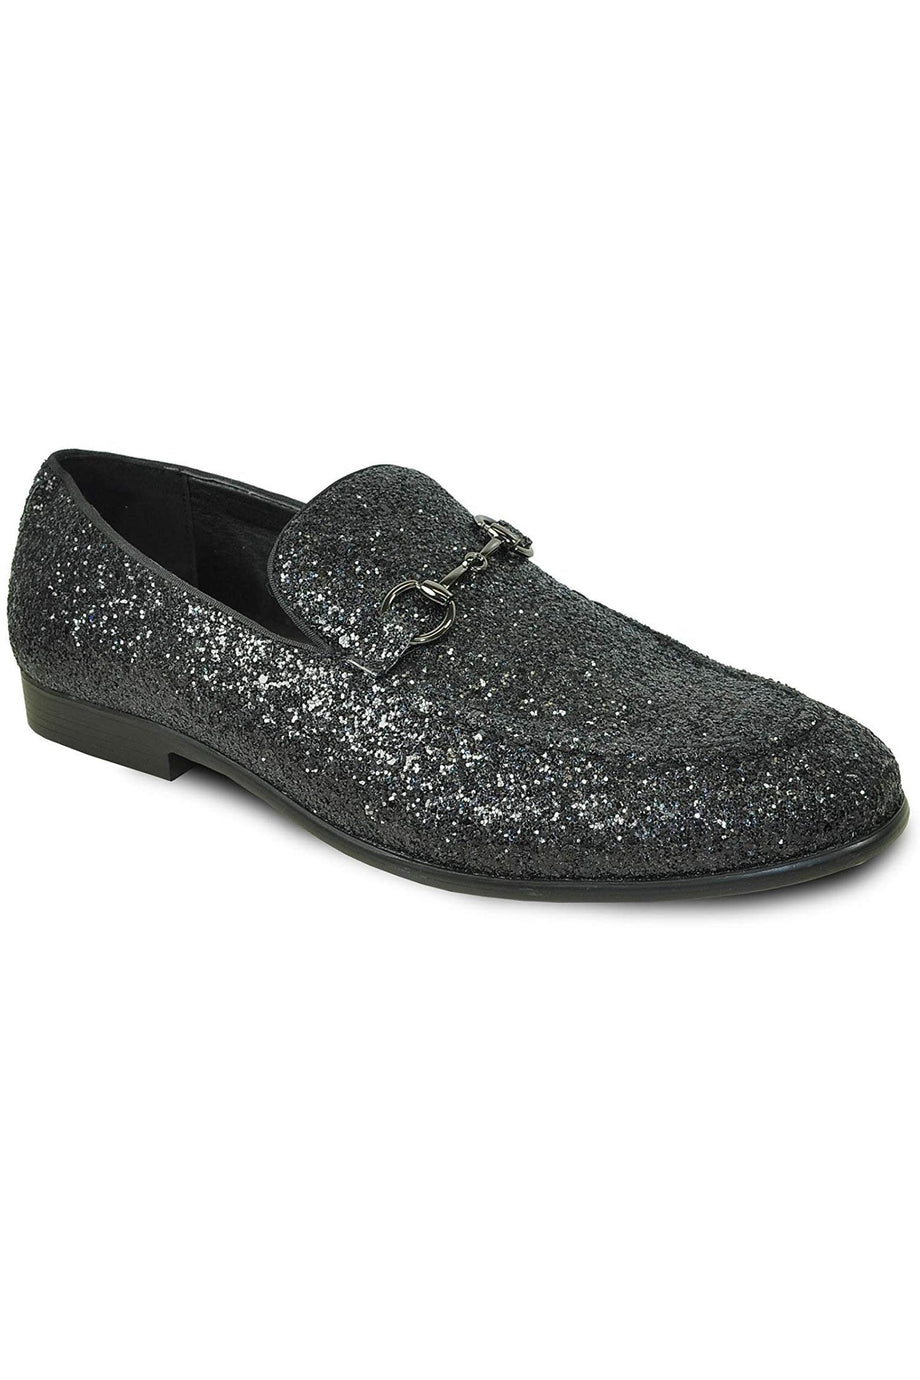 Bravo "Glitter" Black Shoes